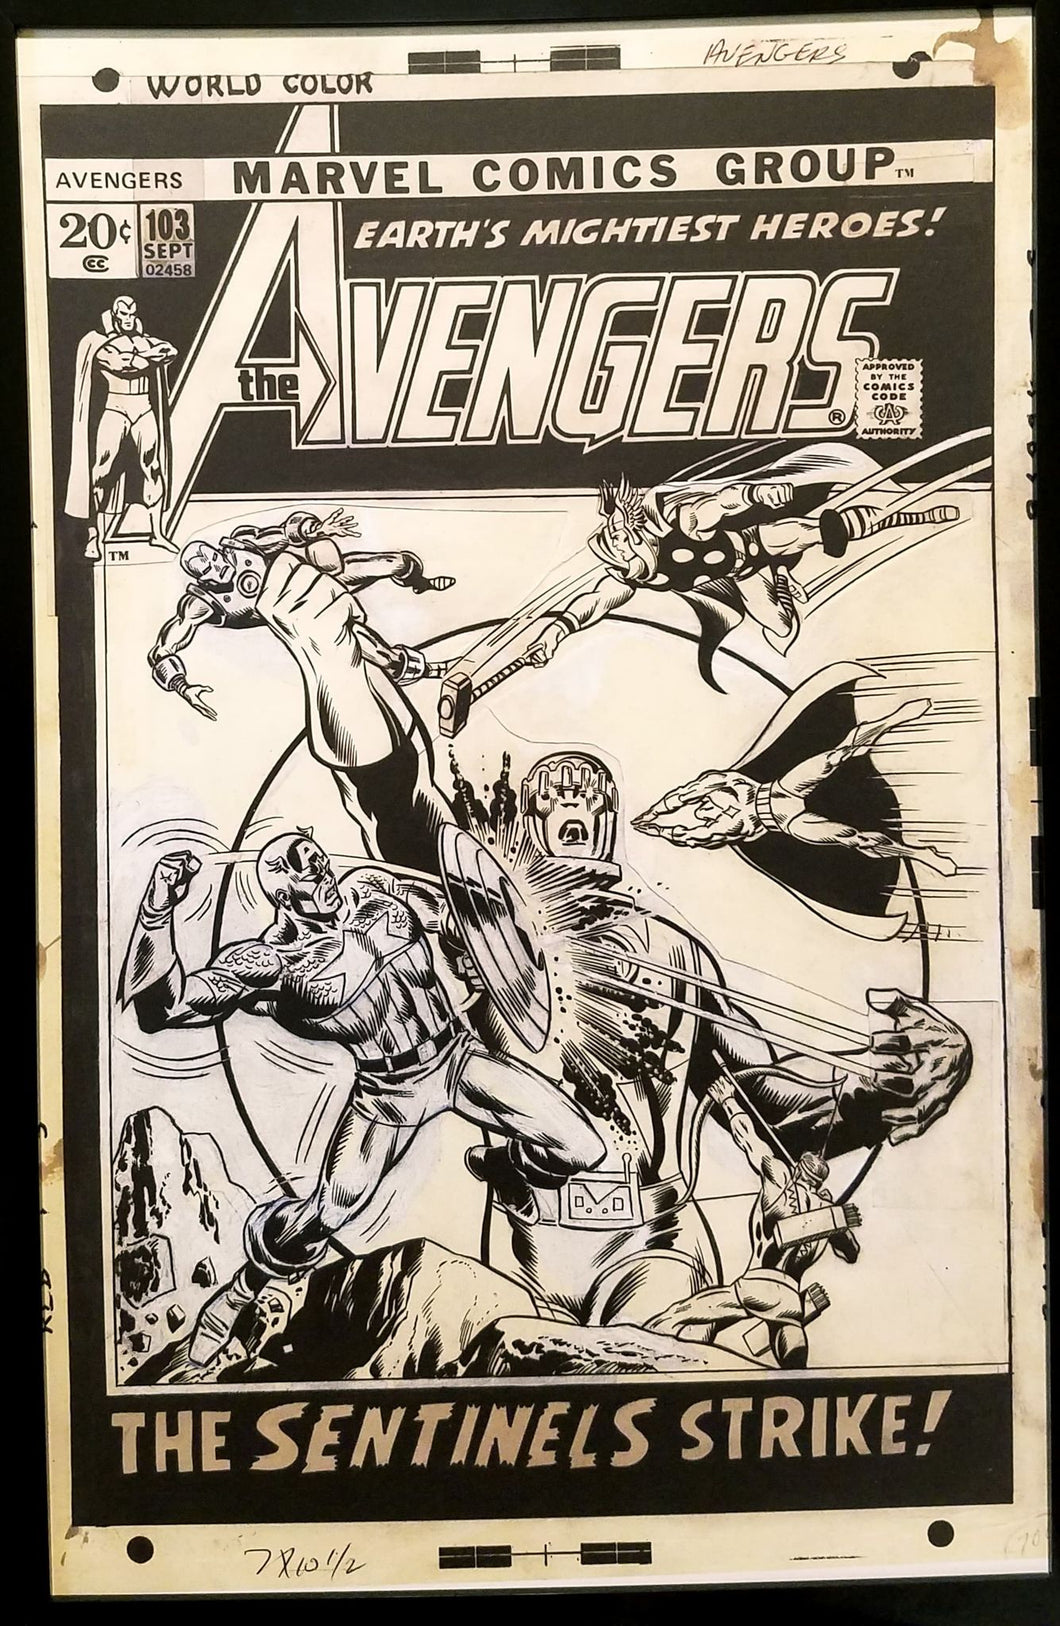 Avengers #103 by Rich Buckler 11x17 FRAMED Original Art Poster Marvel Comics